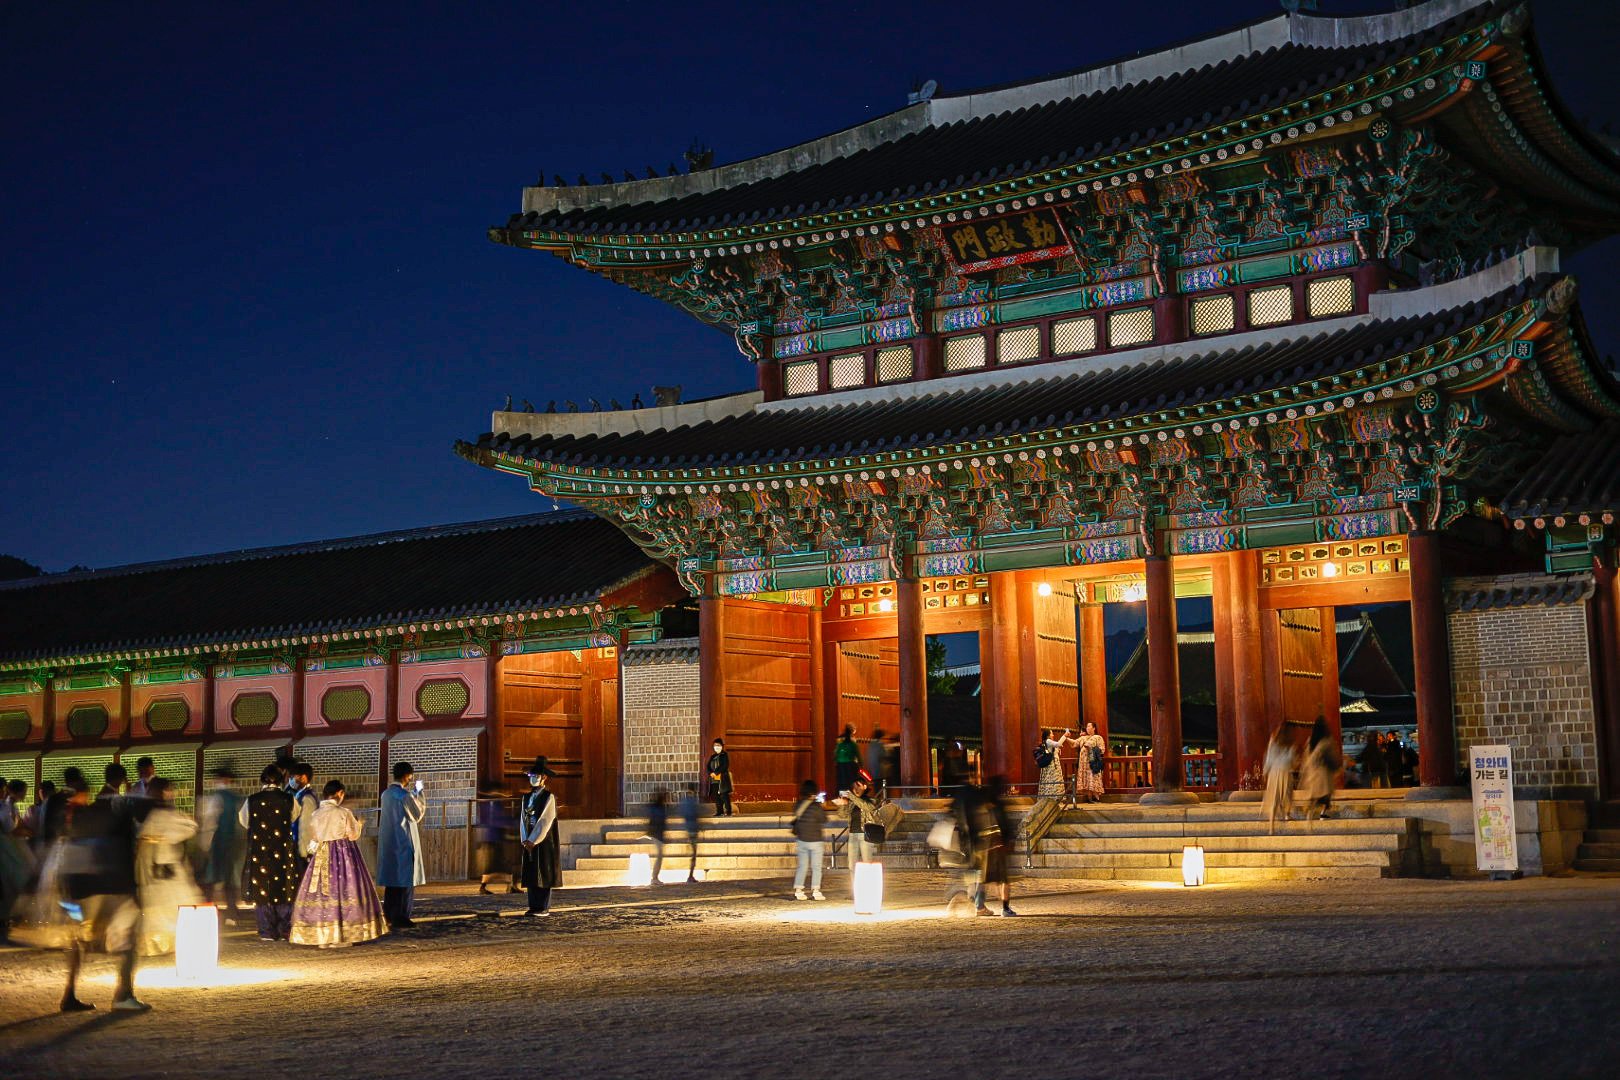 Night Photography in Gyeongbukgung Palace, Seoul, South Korea